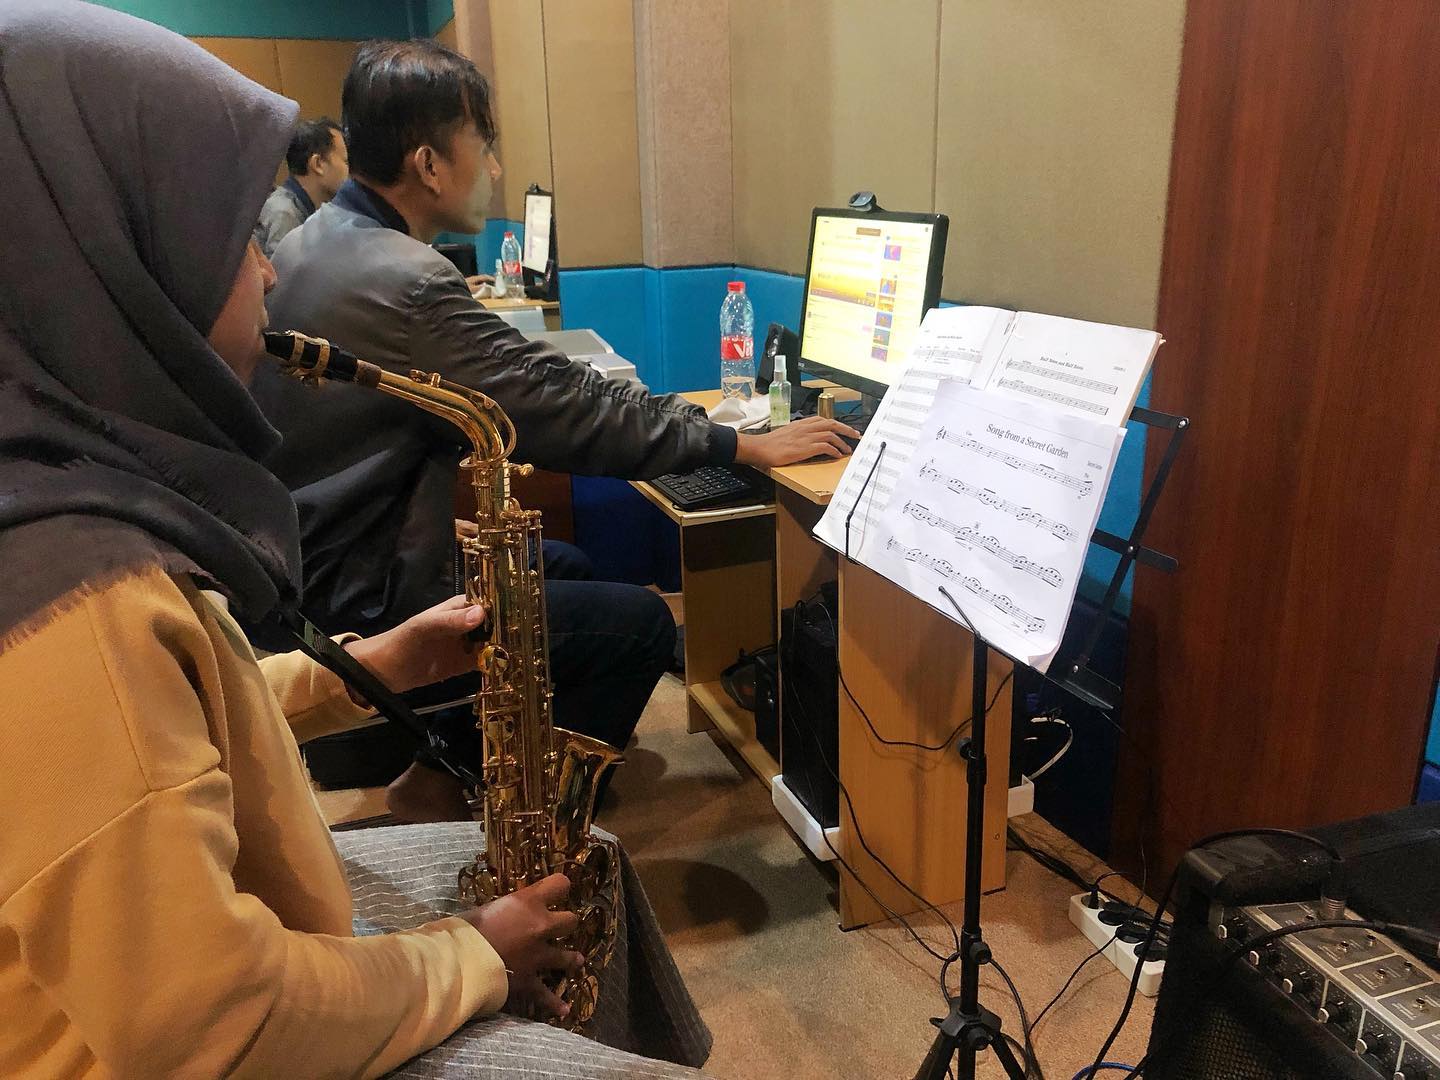 Les Saxophone Jogja Music School: Manfaat dan Keunggulan